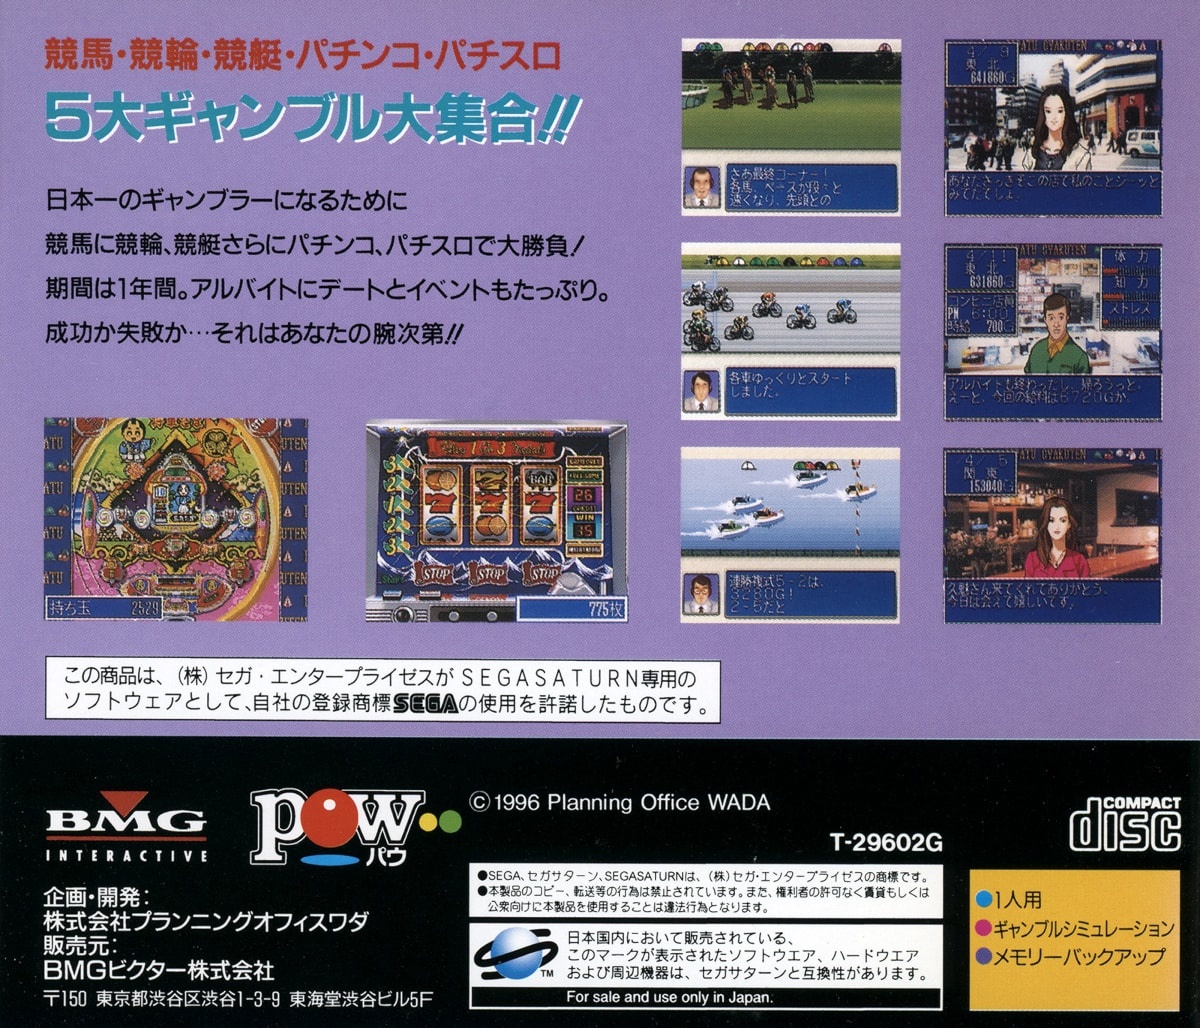 Capa do jogo Ippatsu Gyakuten: Gambling King he no Michi